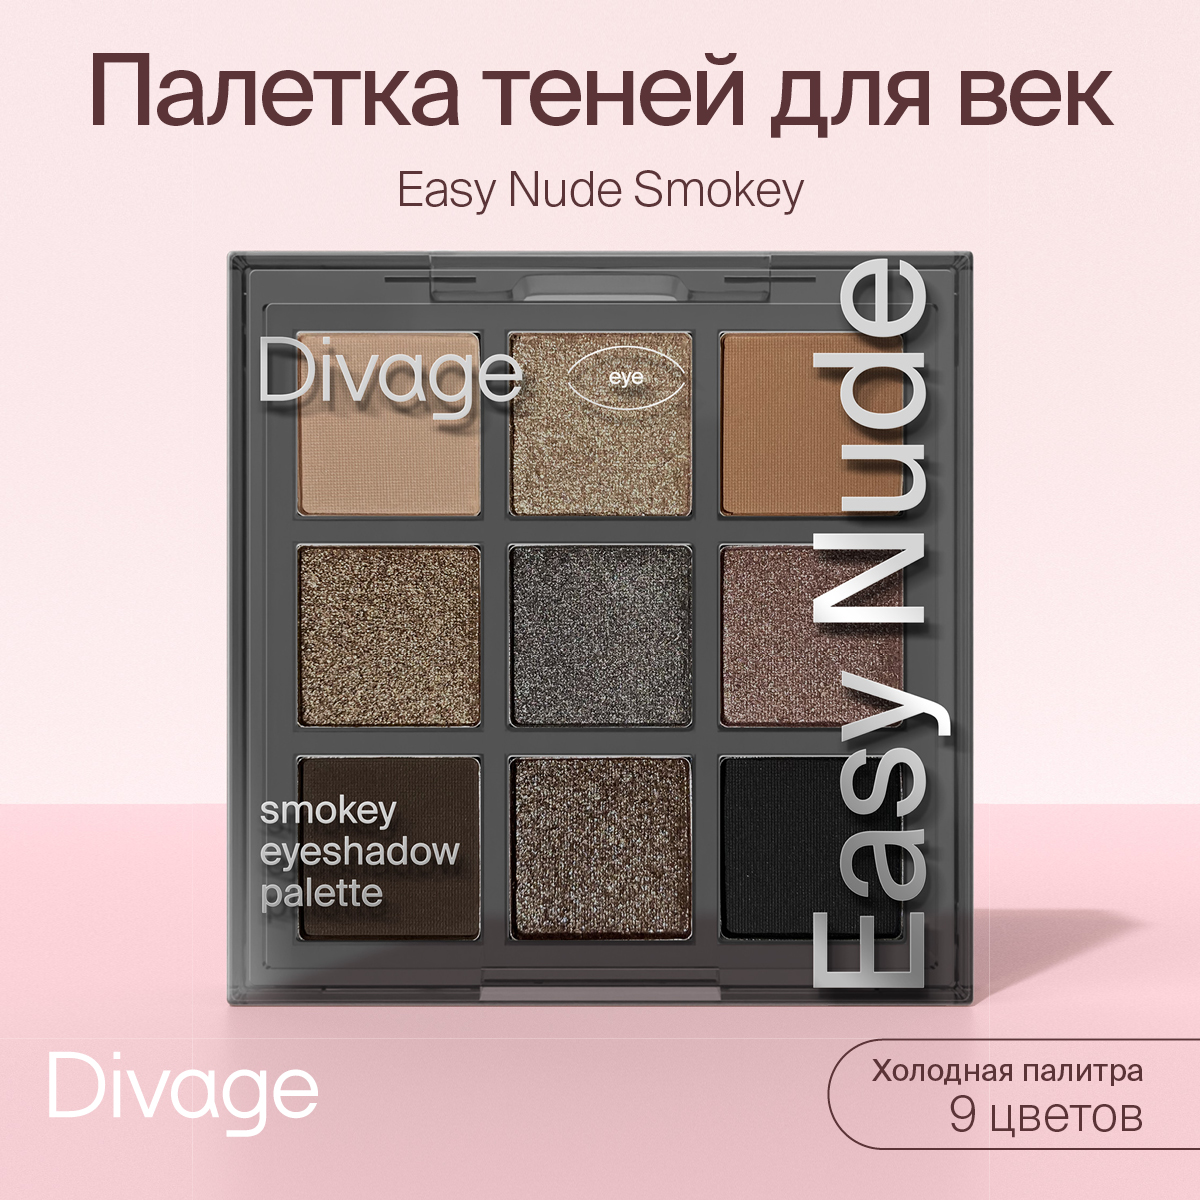 Палетка теней для век Divage Easy Nude Smokey eyeshadow palette